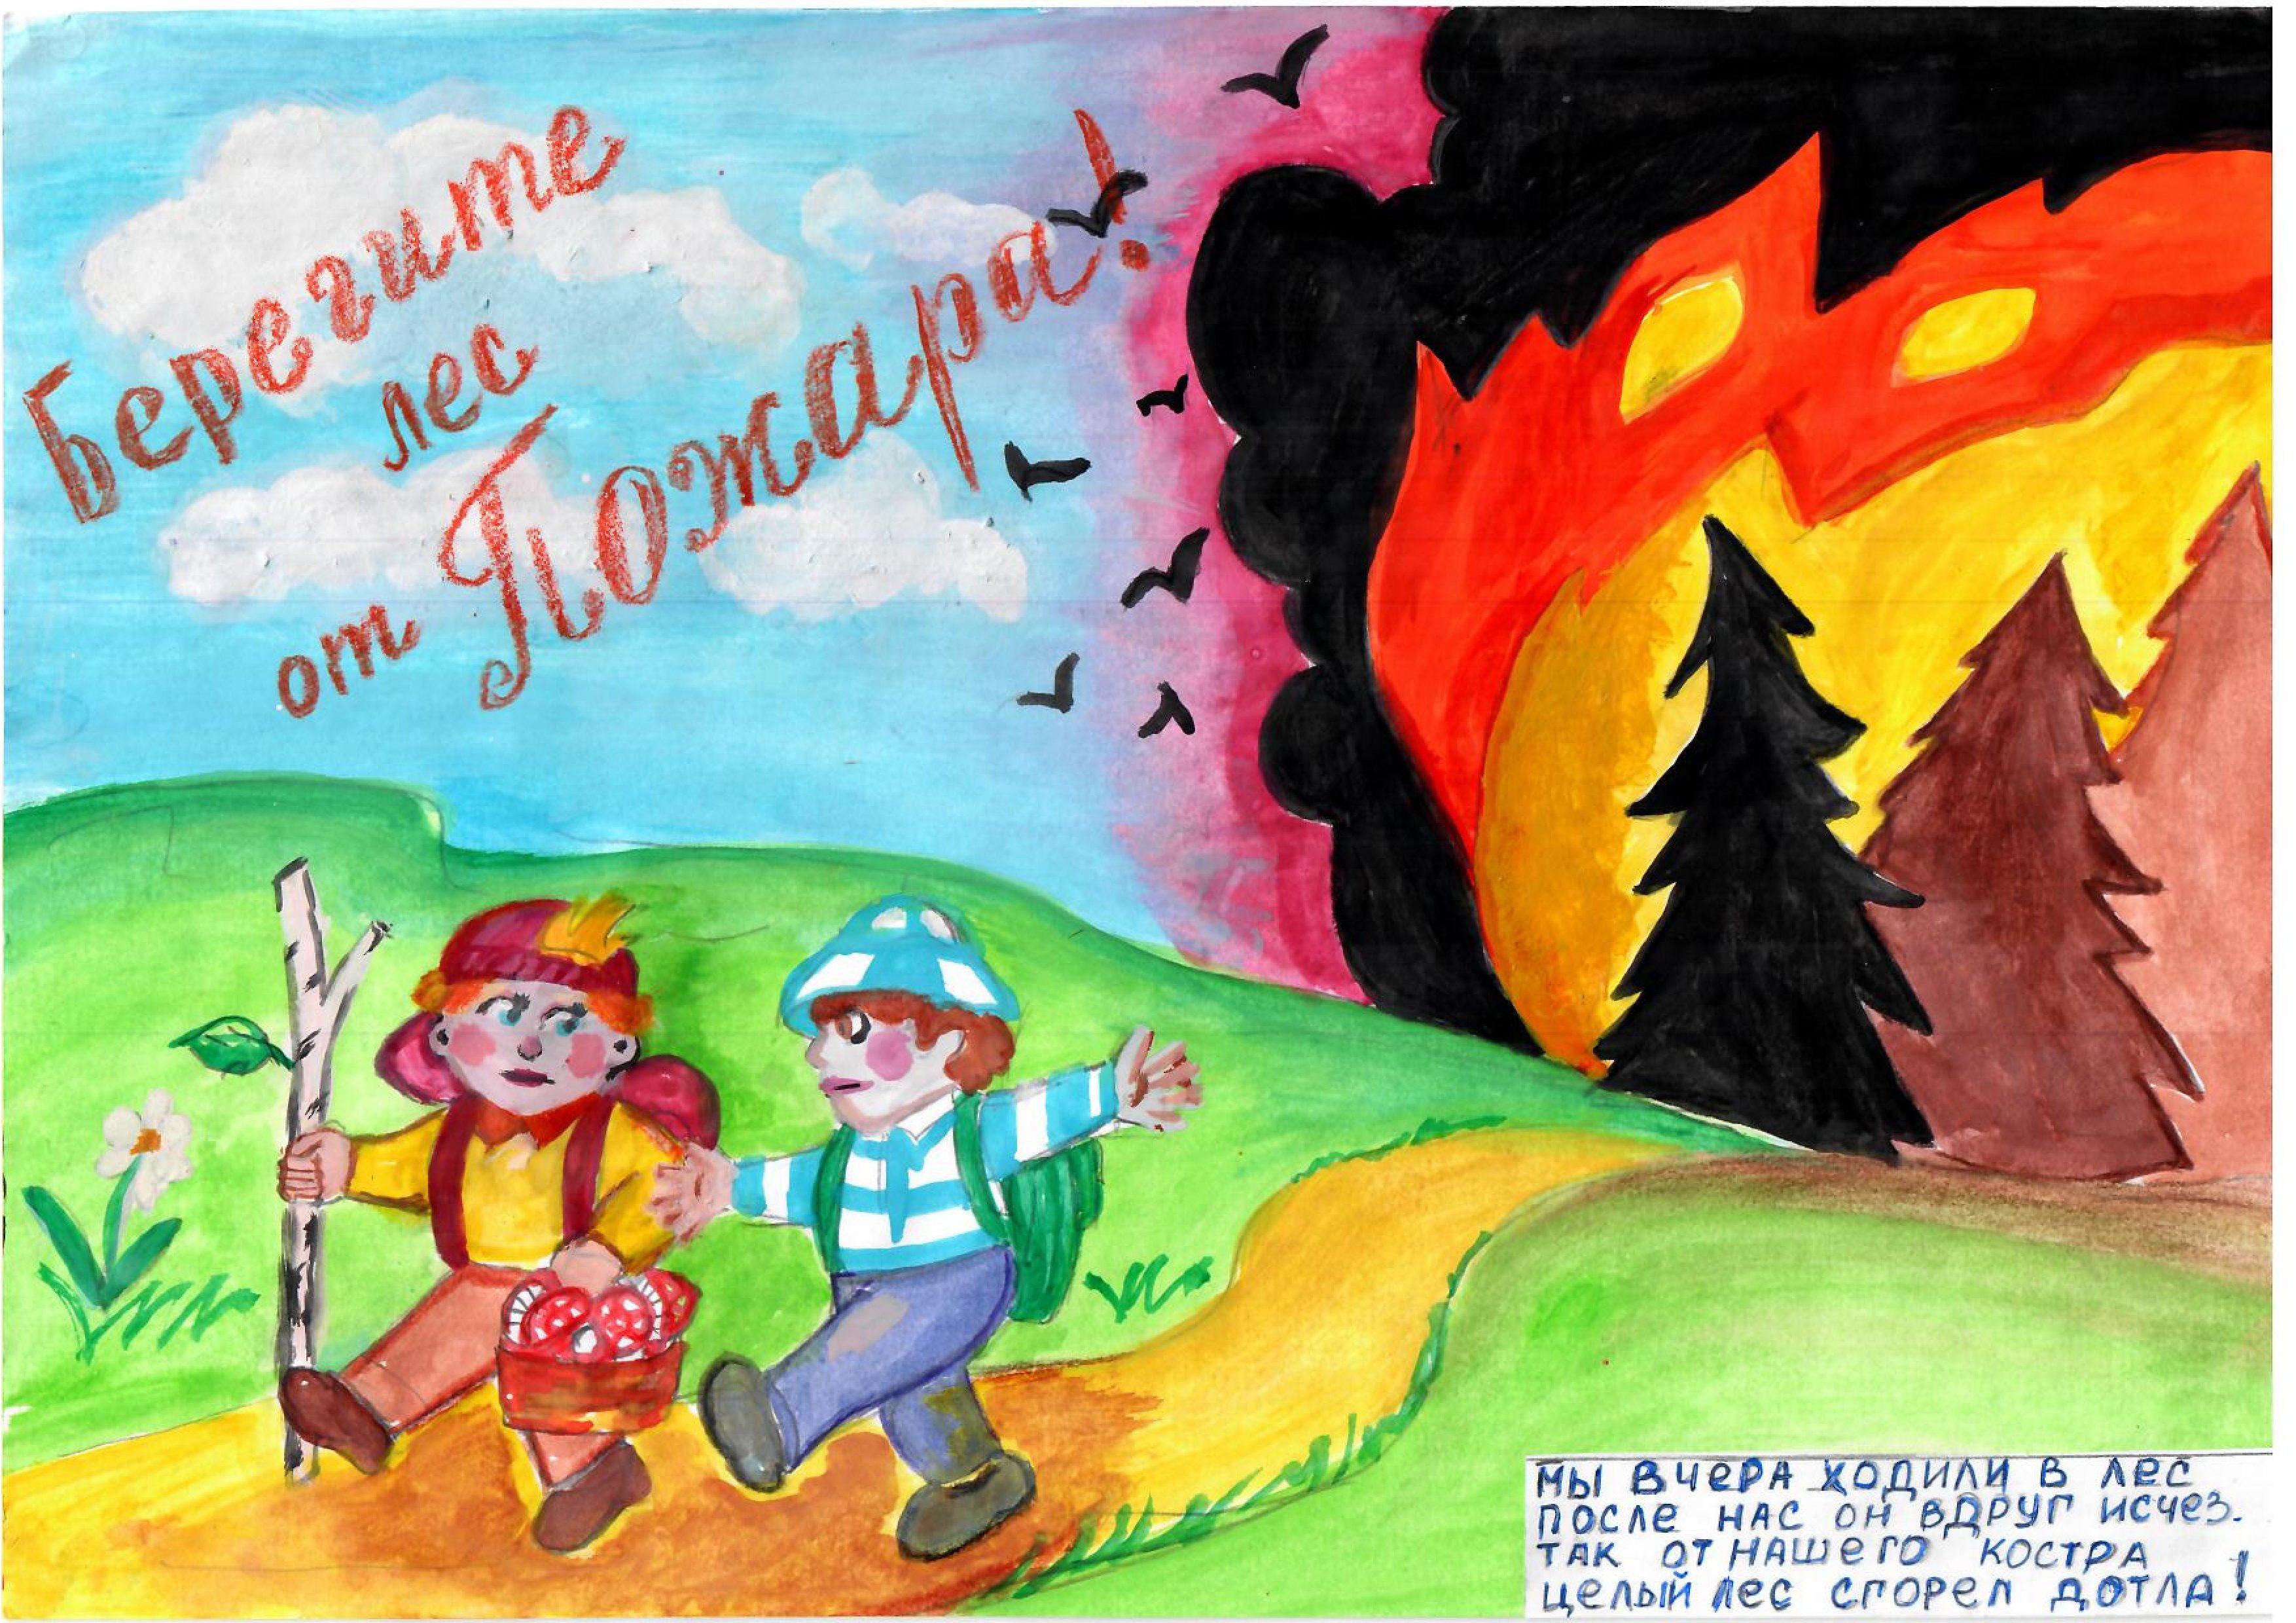 Плакат на тему пожарных. Рисунок на тему пожарная безопасность. Рисунок на тему противопожарная безопасность. Рисунок на тему Лесные пожары. Рисунок на противопожарную тему.